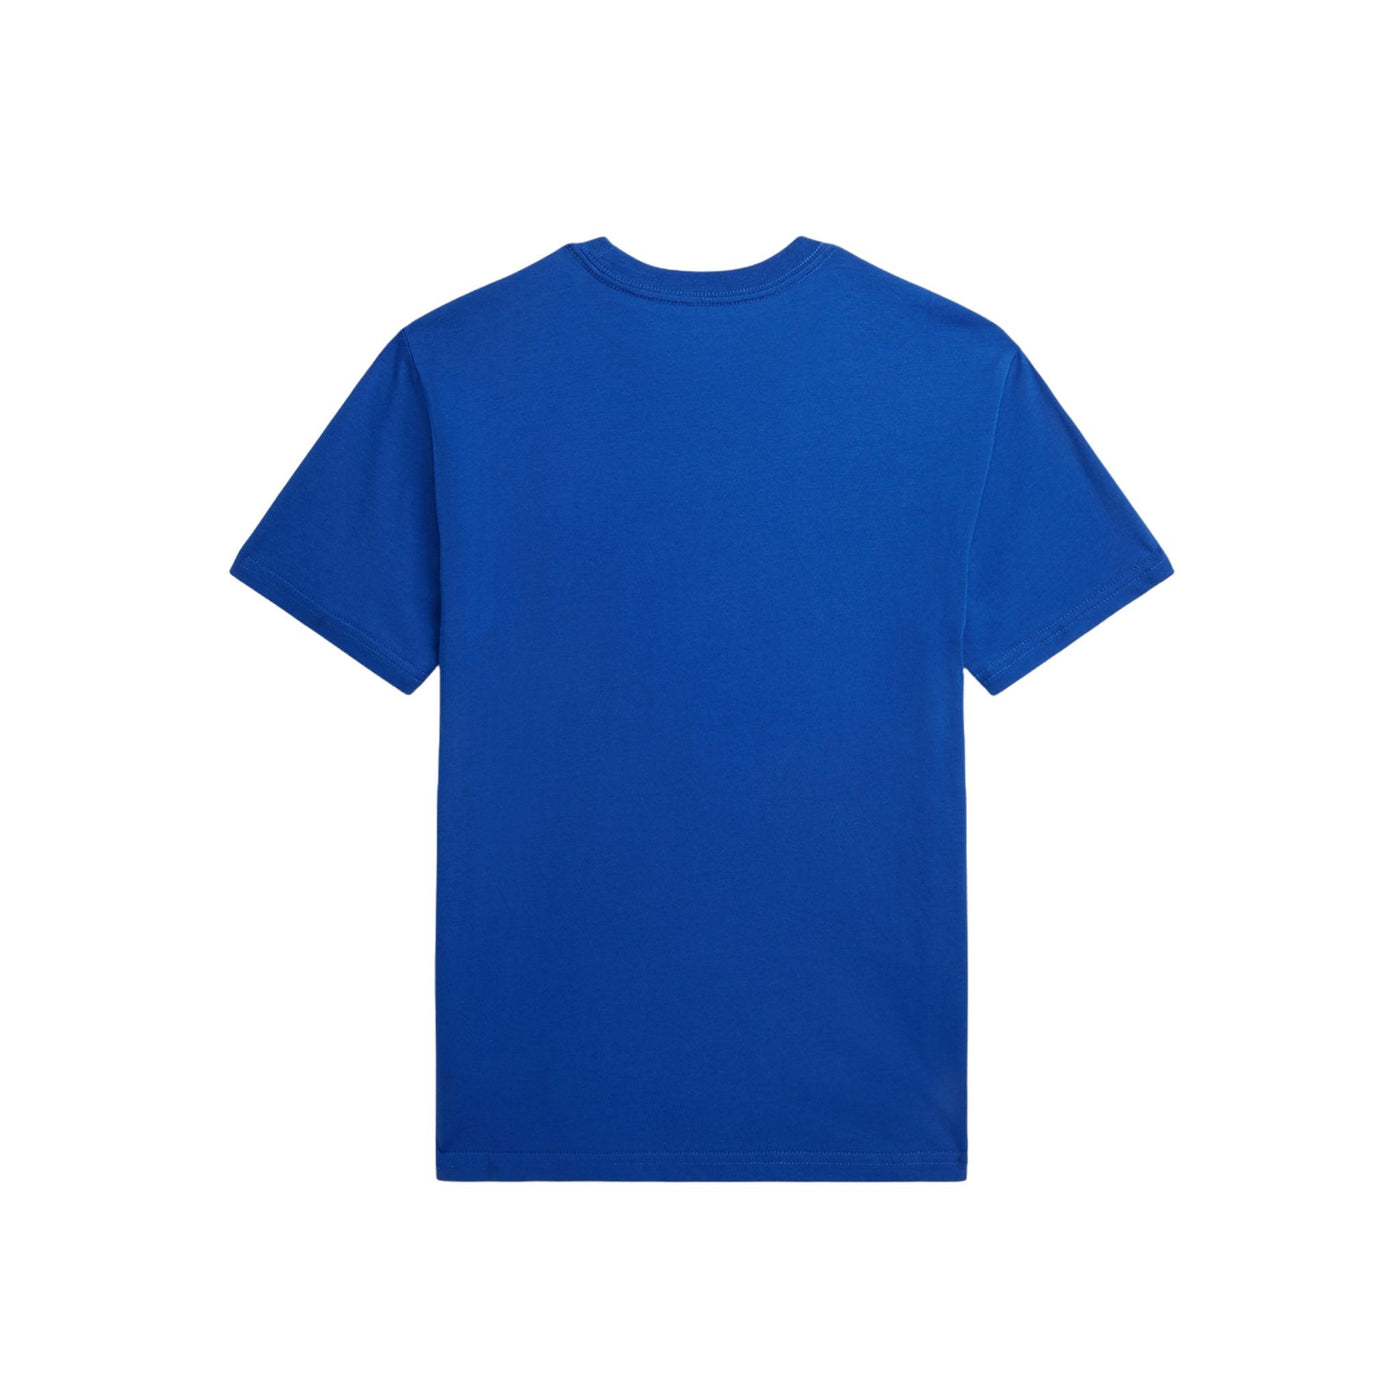 T-shirt Bambino Blu Royal in cotone a maniche corte